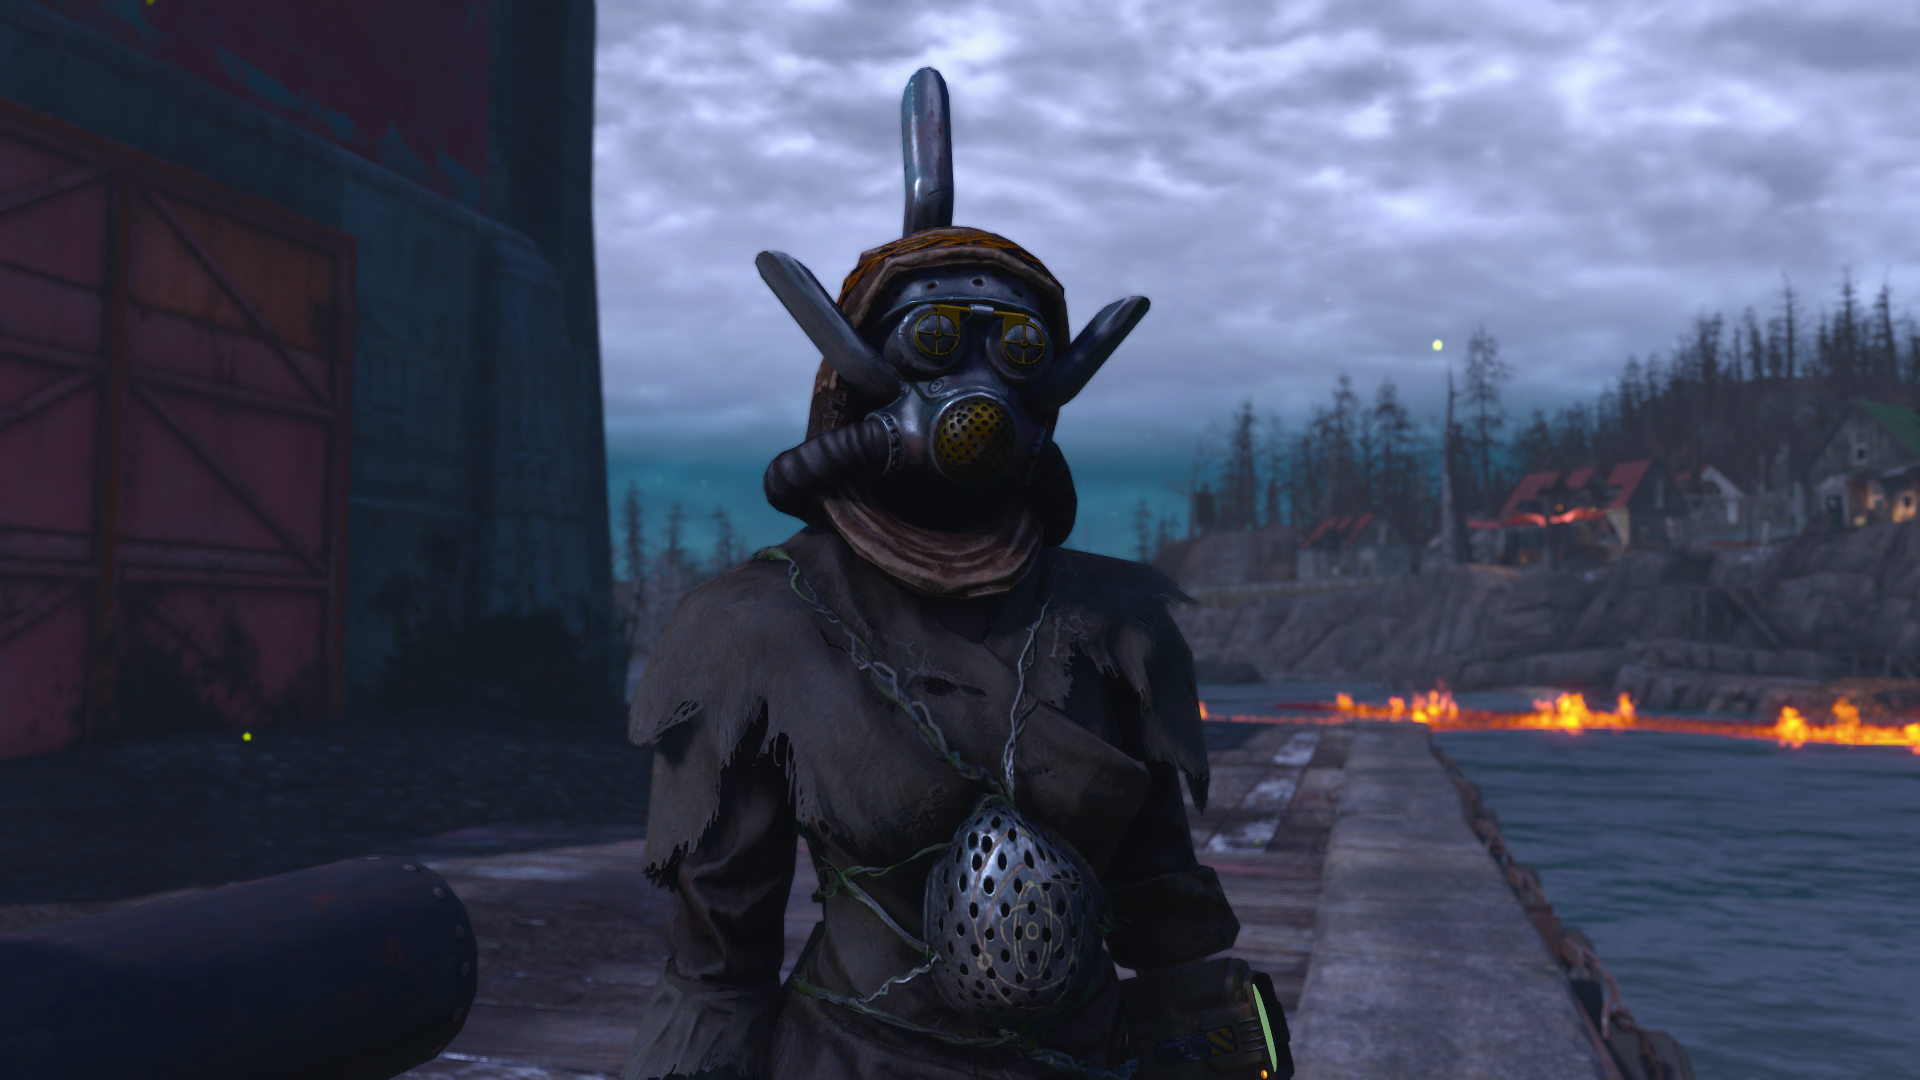 General 1920x1080 Fallout Fallout 4 video games PC gaming helmet screen shot